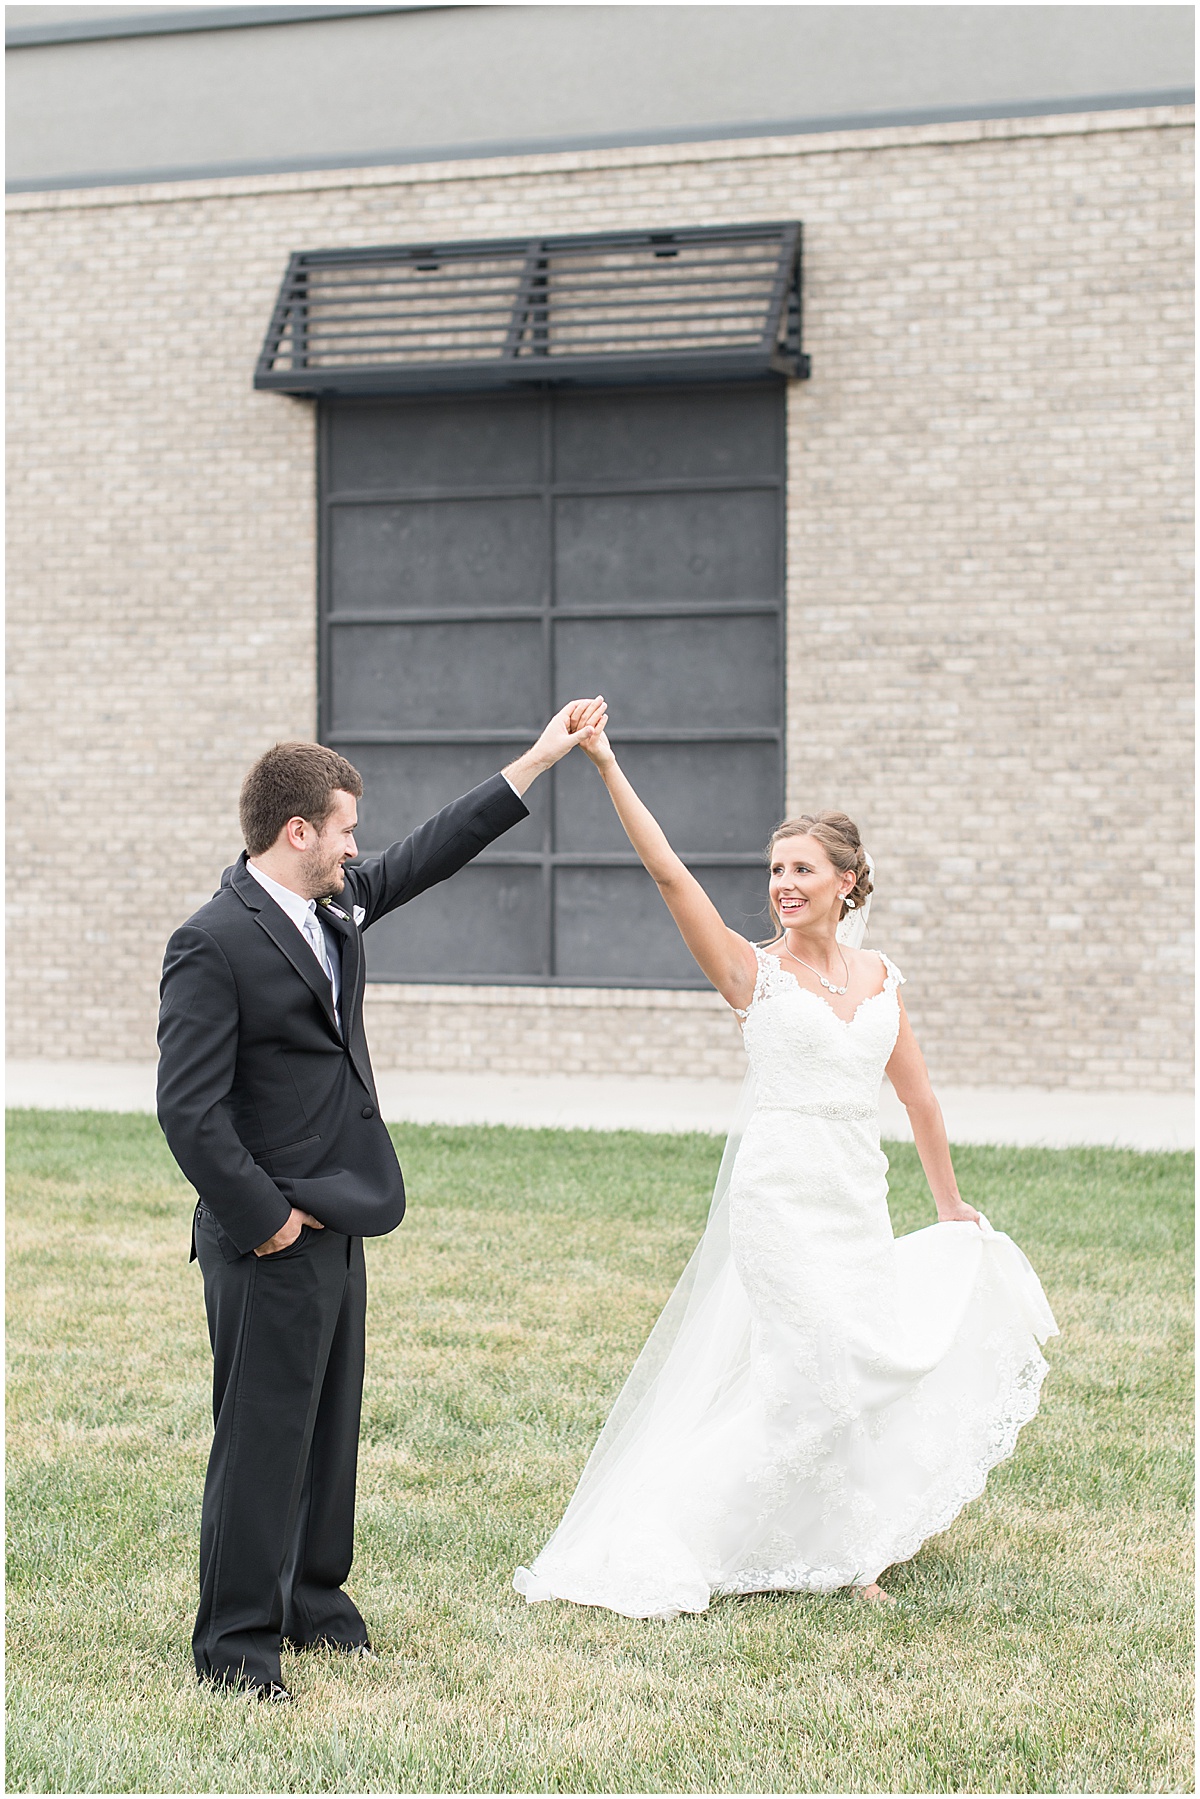 Bride and groom dancing at Bel Air Events Wedding in Kokomo, Indiana